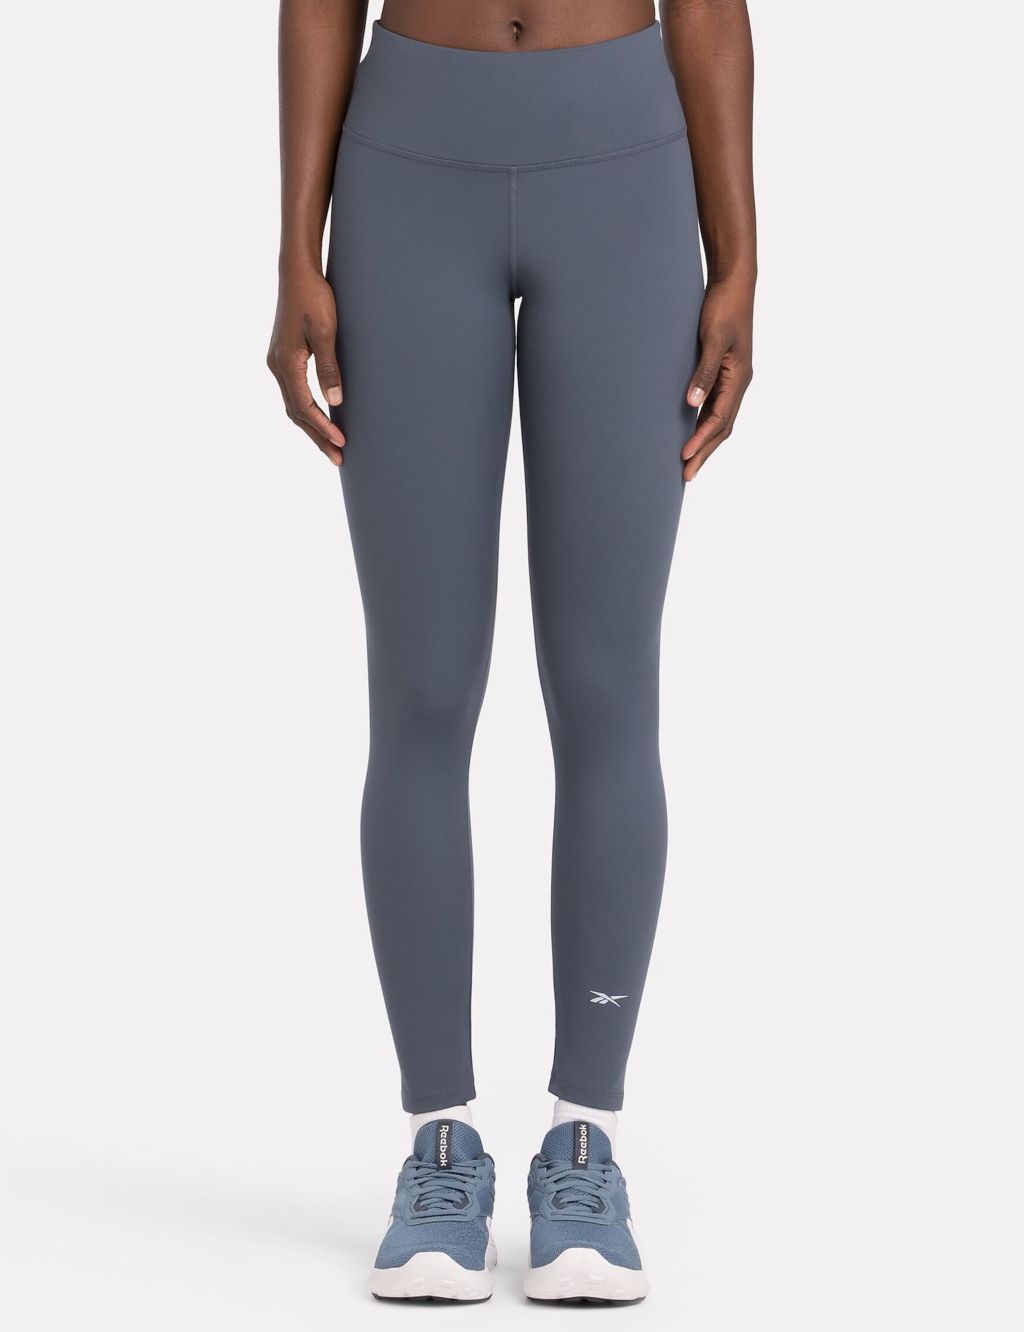 Spalding Athletic Gray Leggings Size 1X (Plus) - 38% off